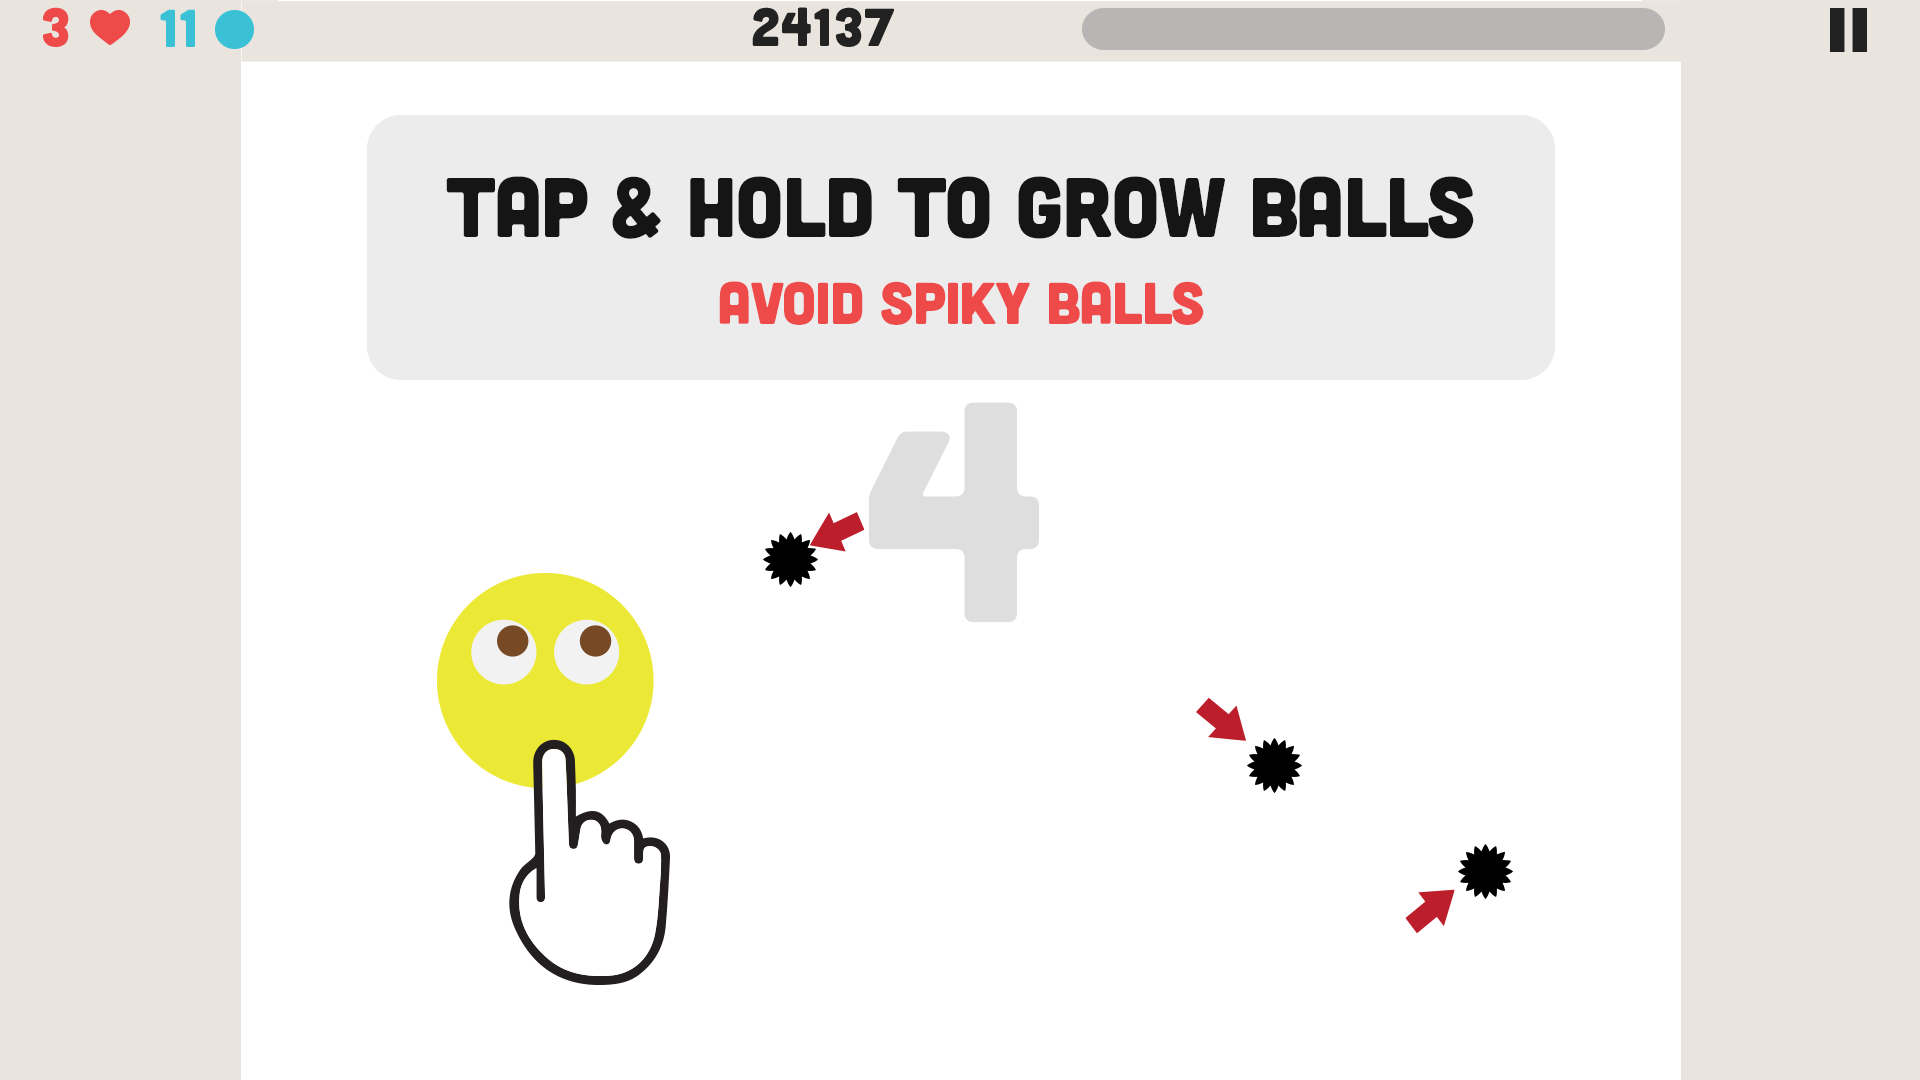 Some balls. Tap tap Ball. Some balls game. Grow some big balls bro.